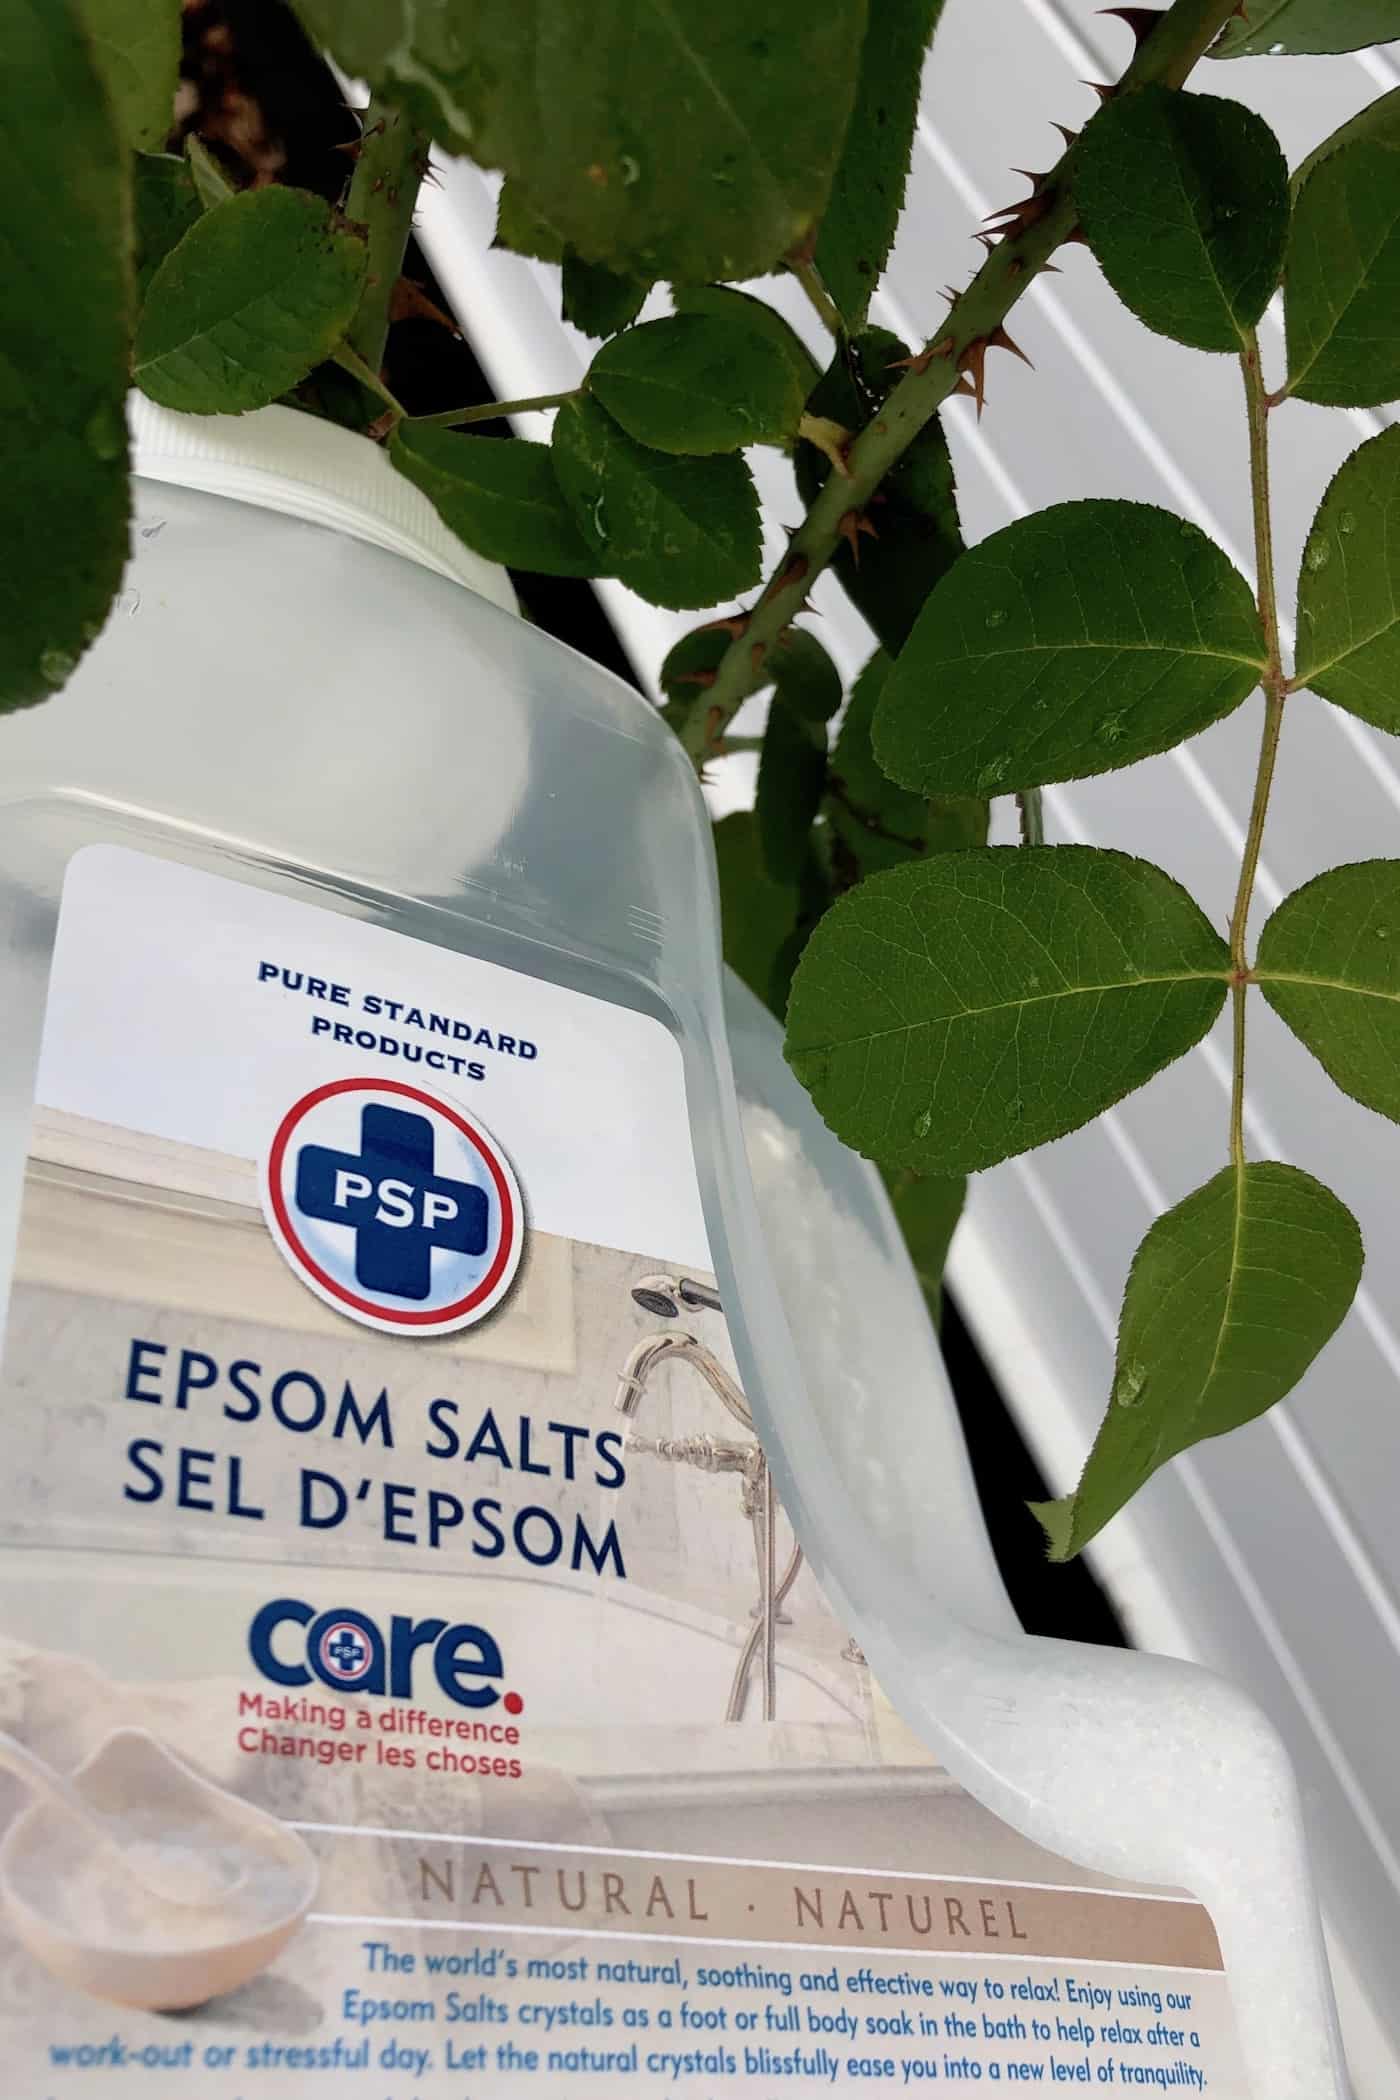 Epsom salt fertilizer for rose plants